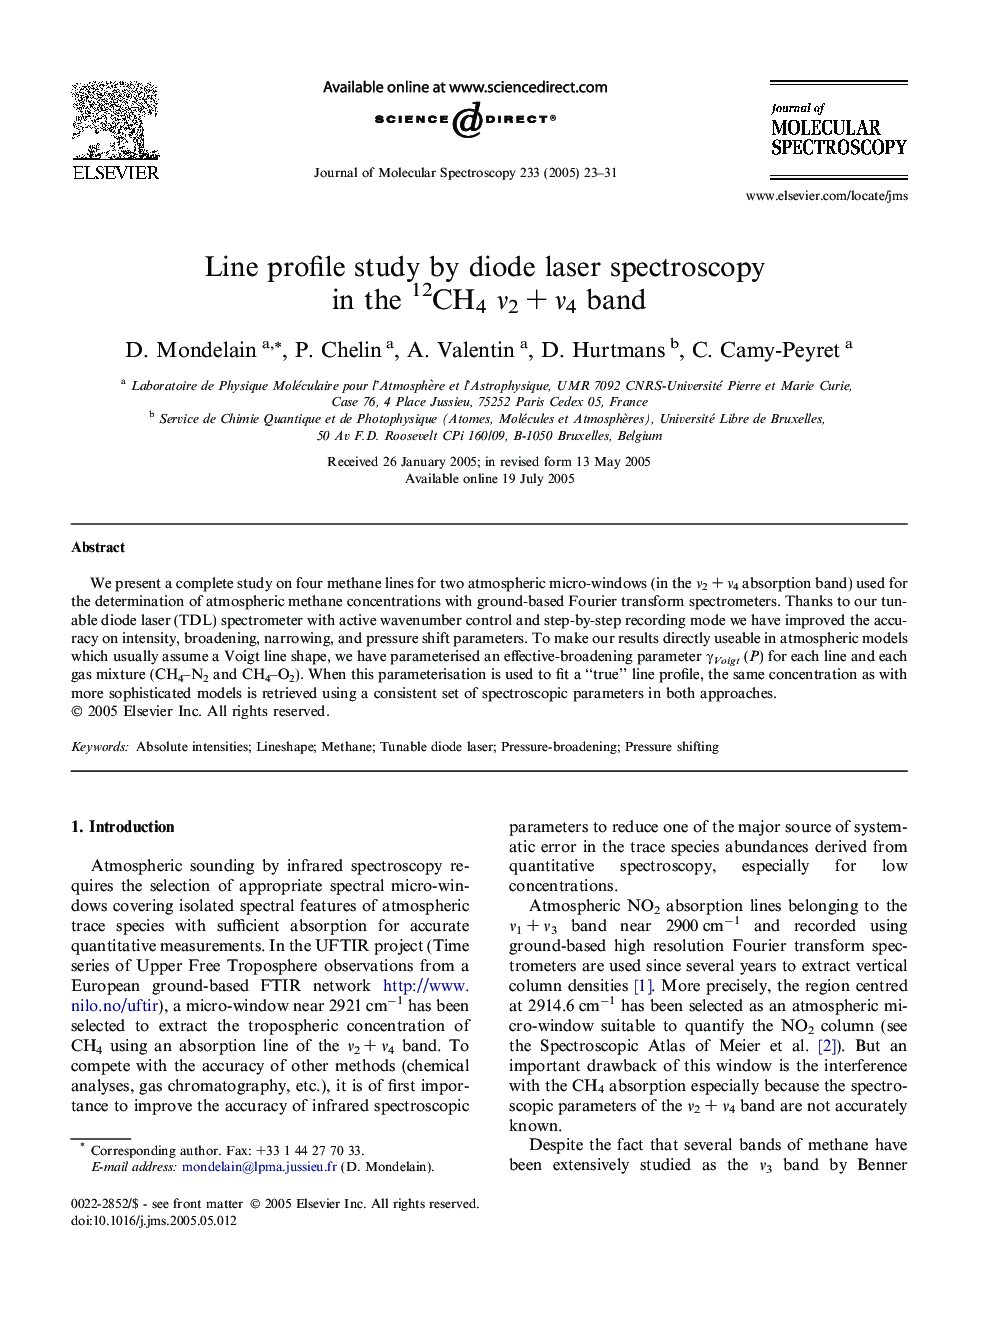 Line profile study by diode laser spectroscopy in the 12CH4Î½2Â +Â Î½4 band